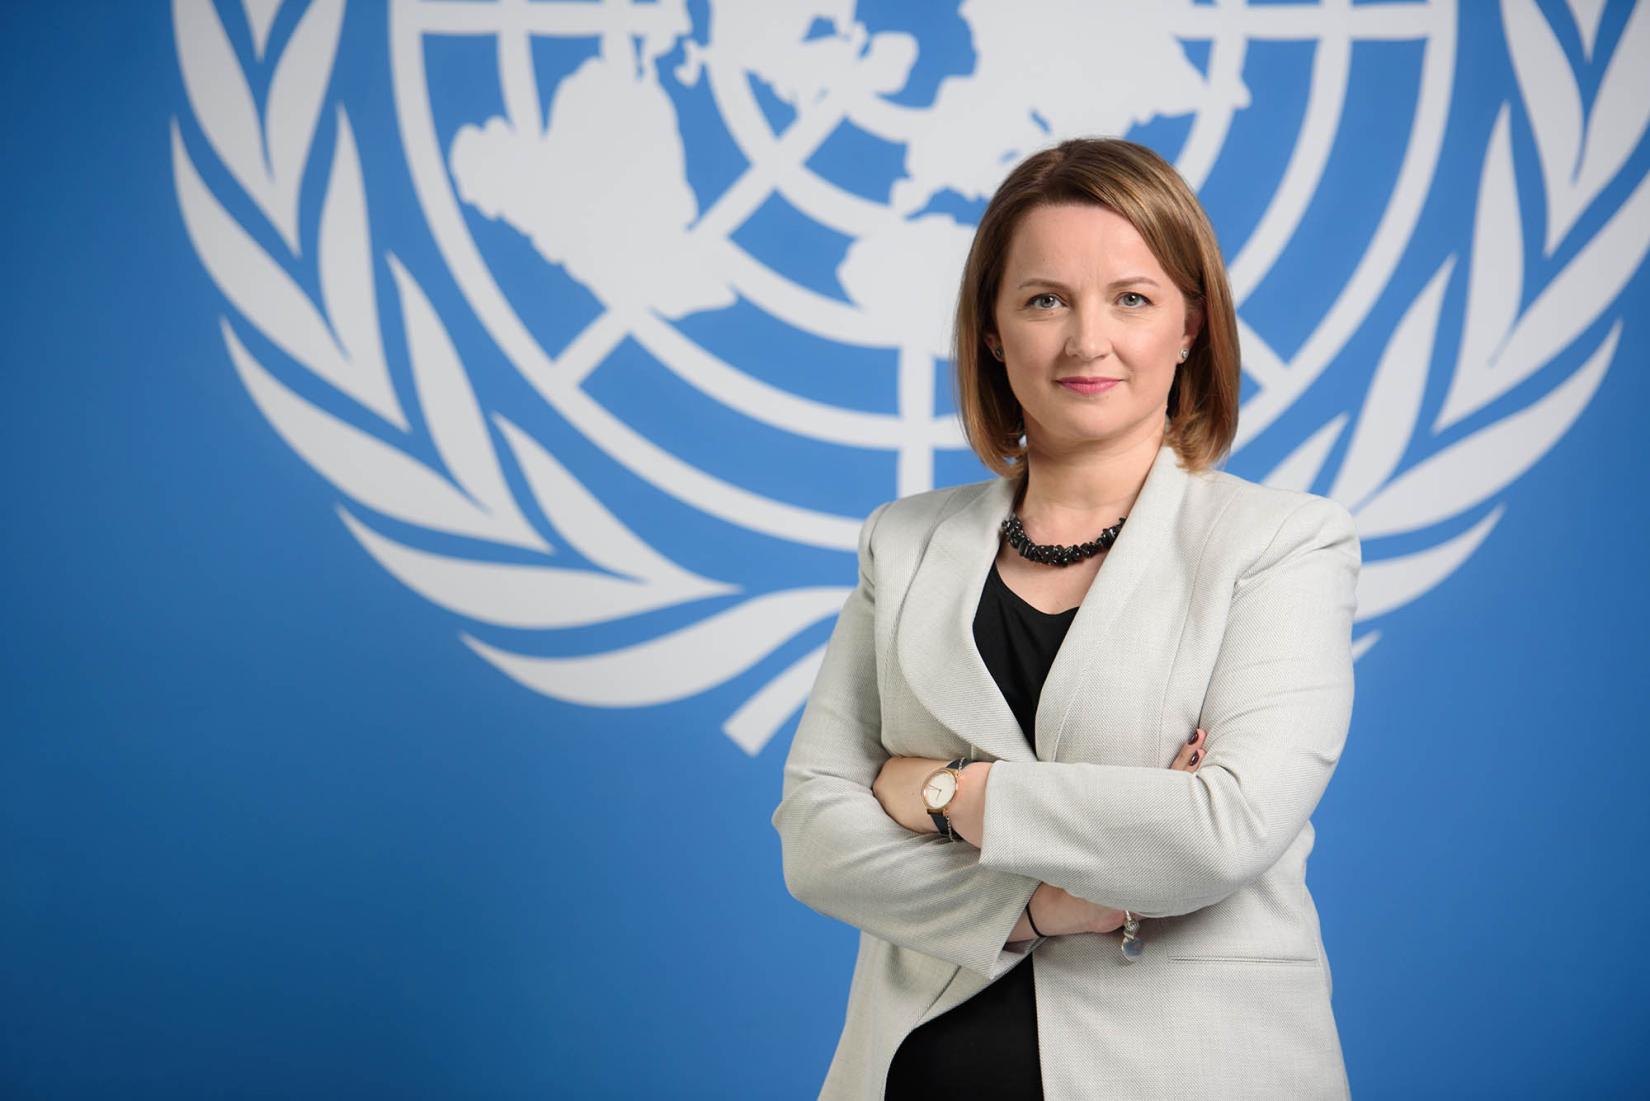 The UN Resident Coordinator in Belarus Joanna Kazana-Wisniowiecki